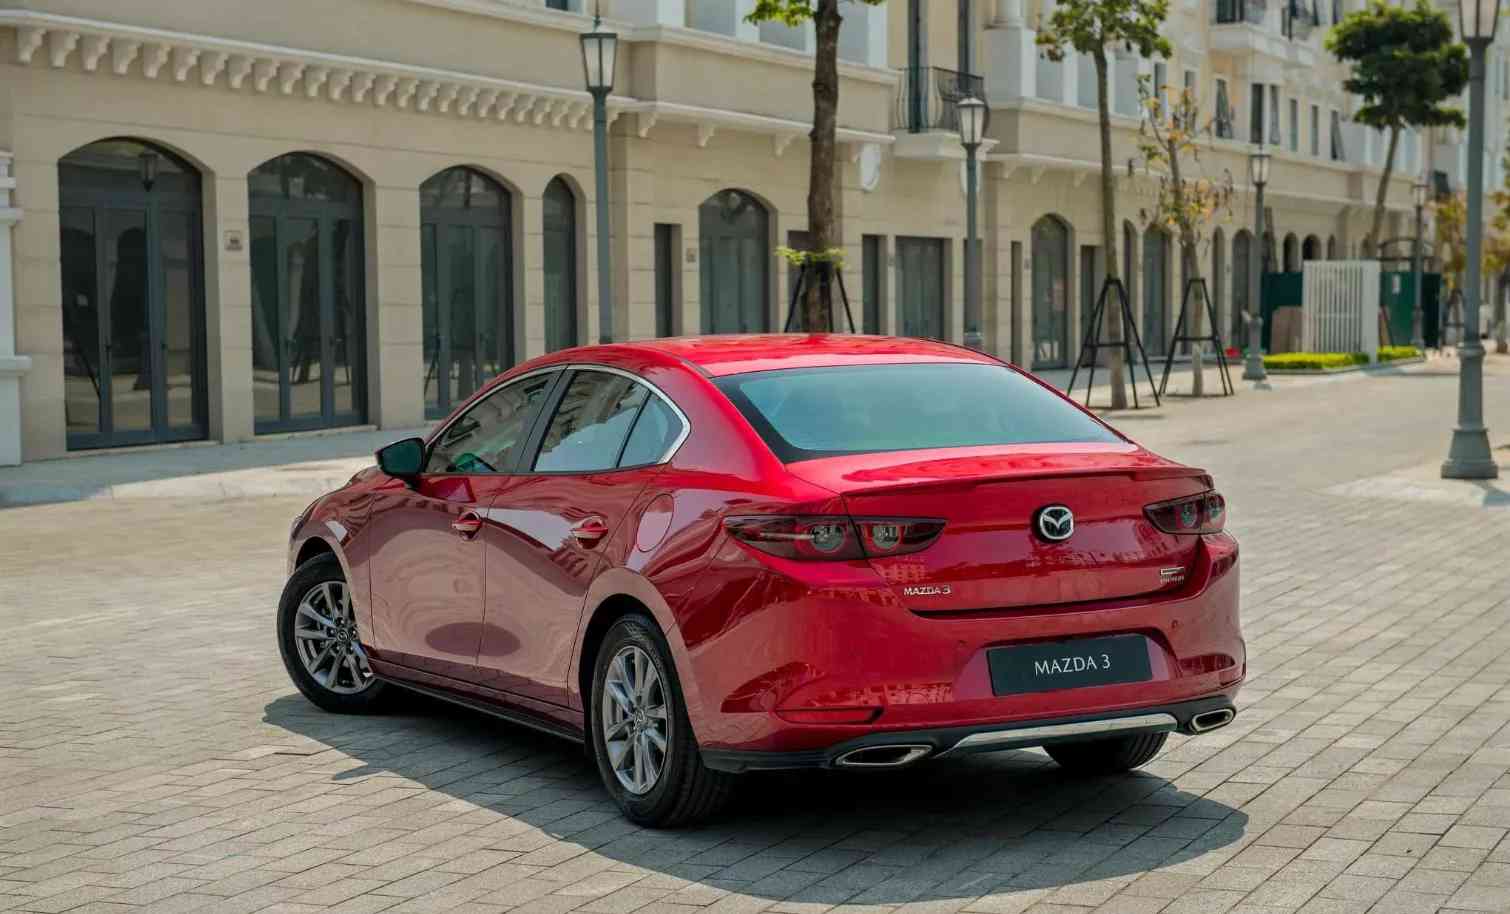 Thông số ngoại thất xe Mazda 3 1.5L Signature